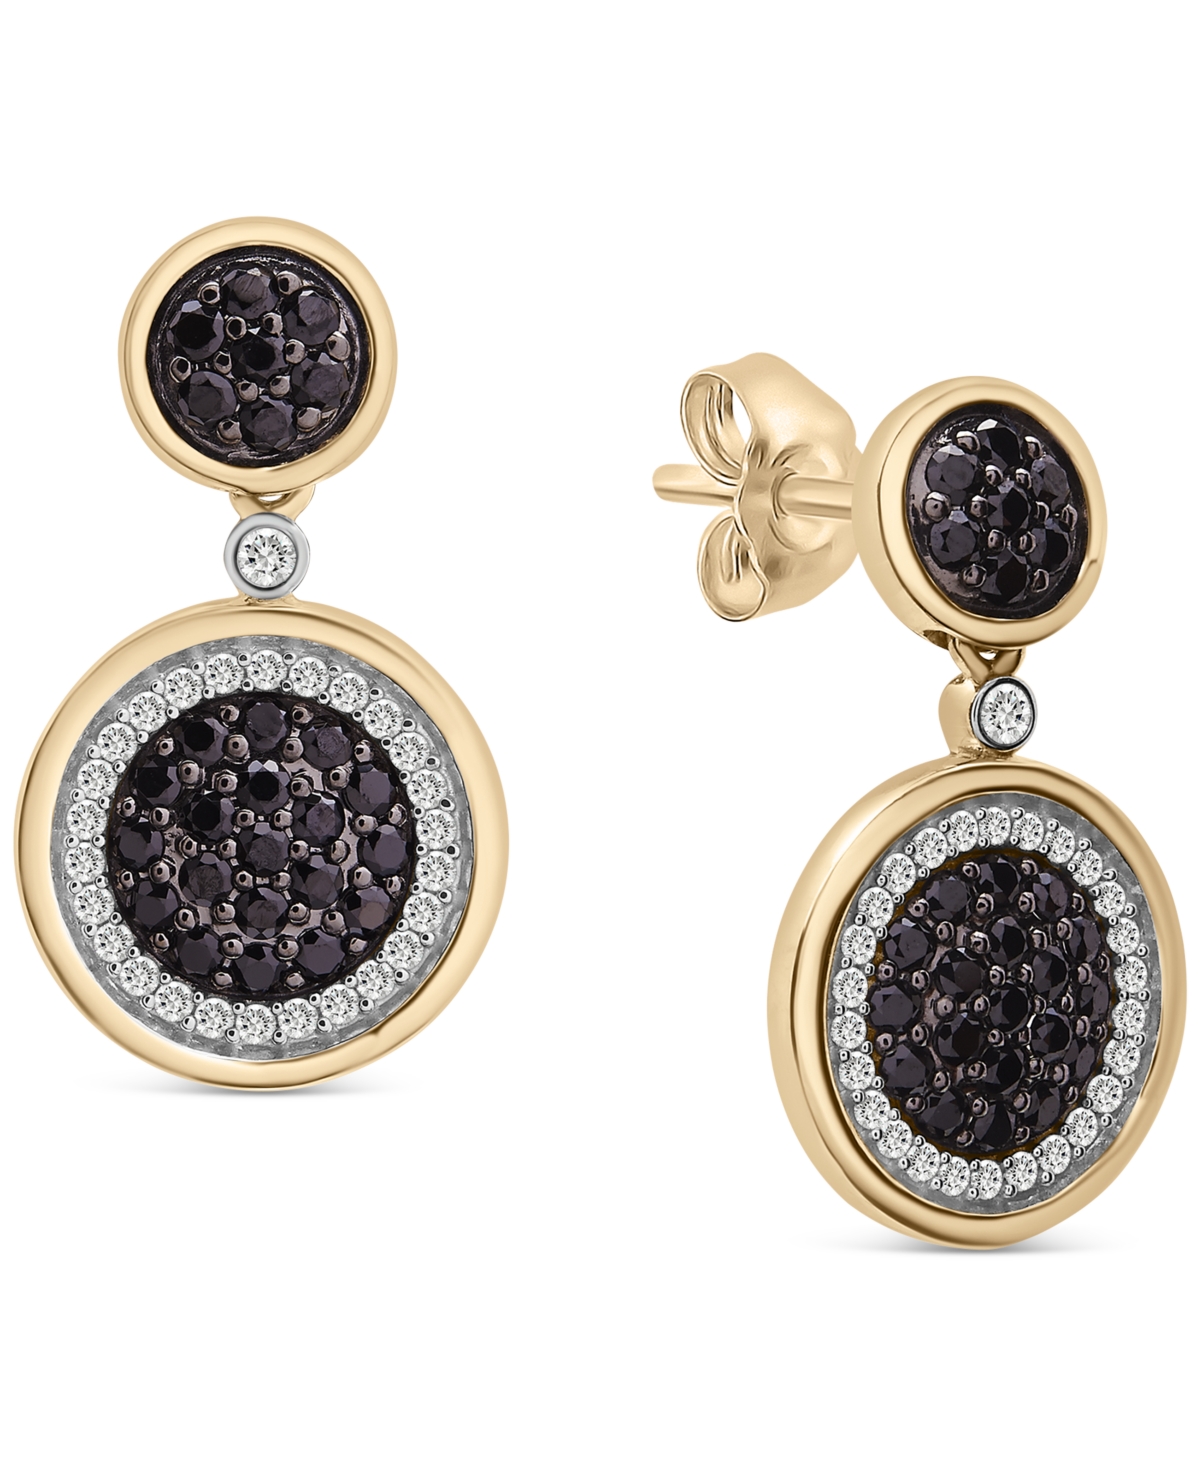 Black Diamond (1/2 ct. t.w.) & White Diamond (1/4 ct. t.w.) Circle Drop Earrings in 14k Gold, Created for Macy's - Yellow Gold